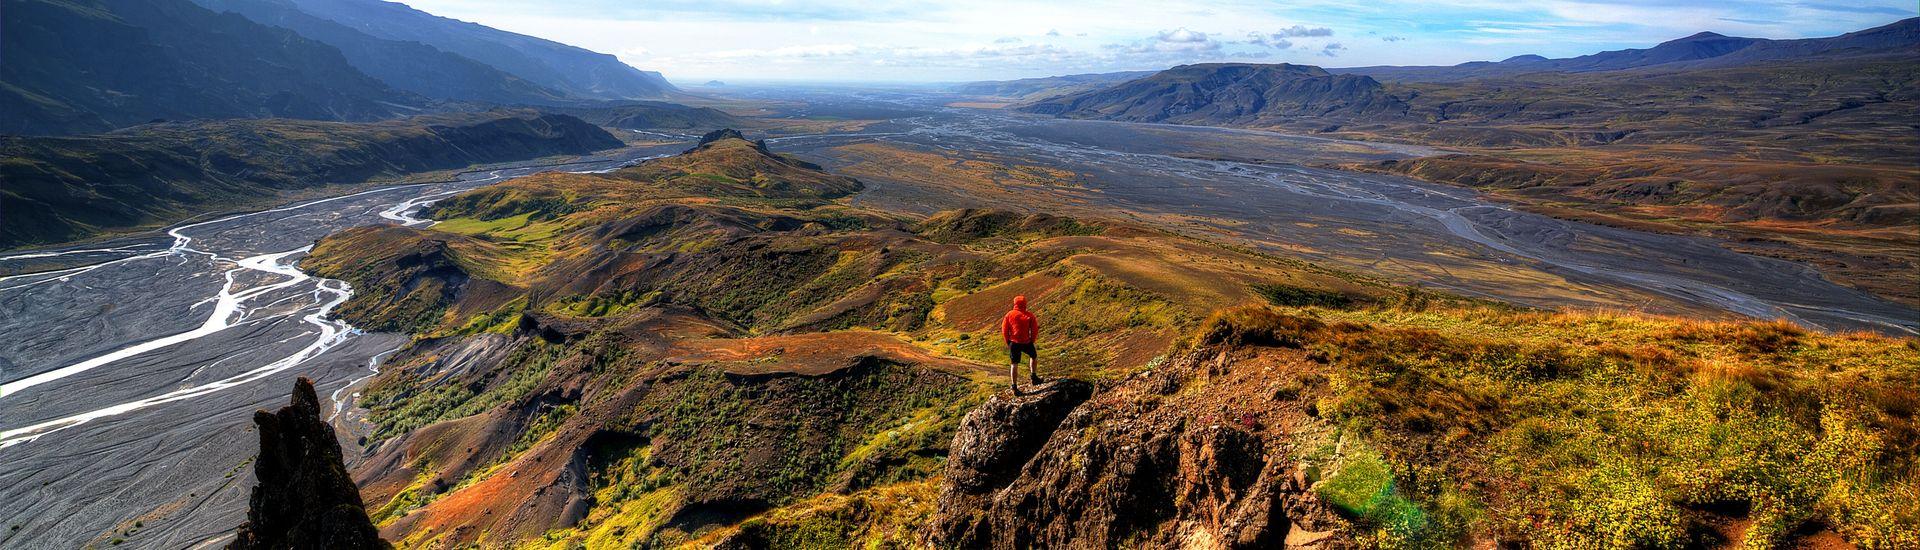 Islandia - na szlakach interioru